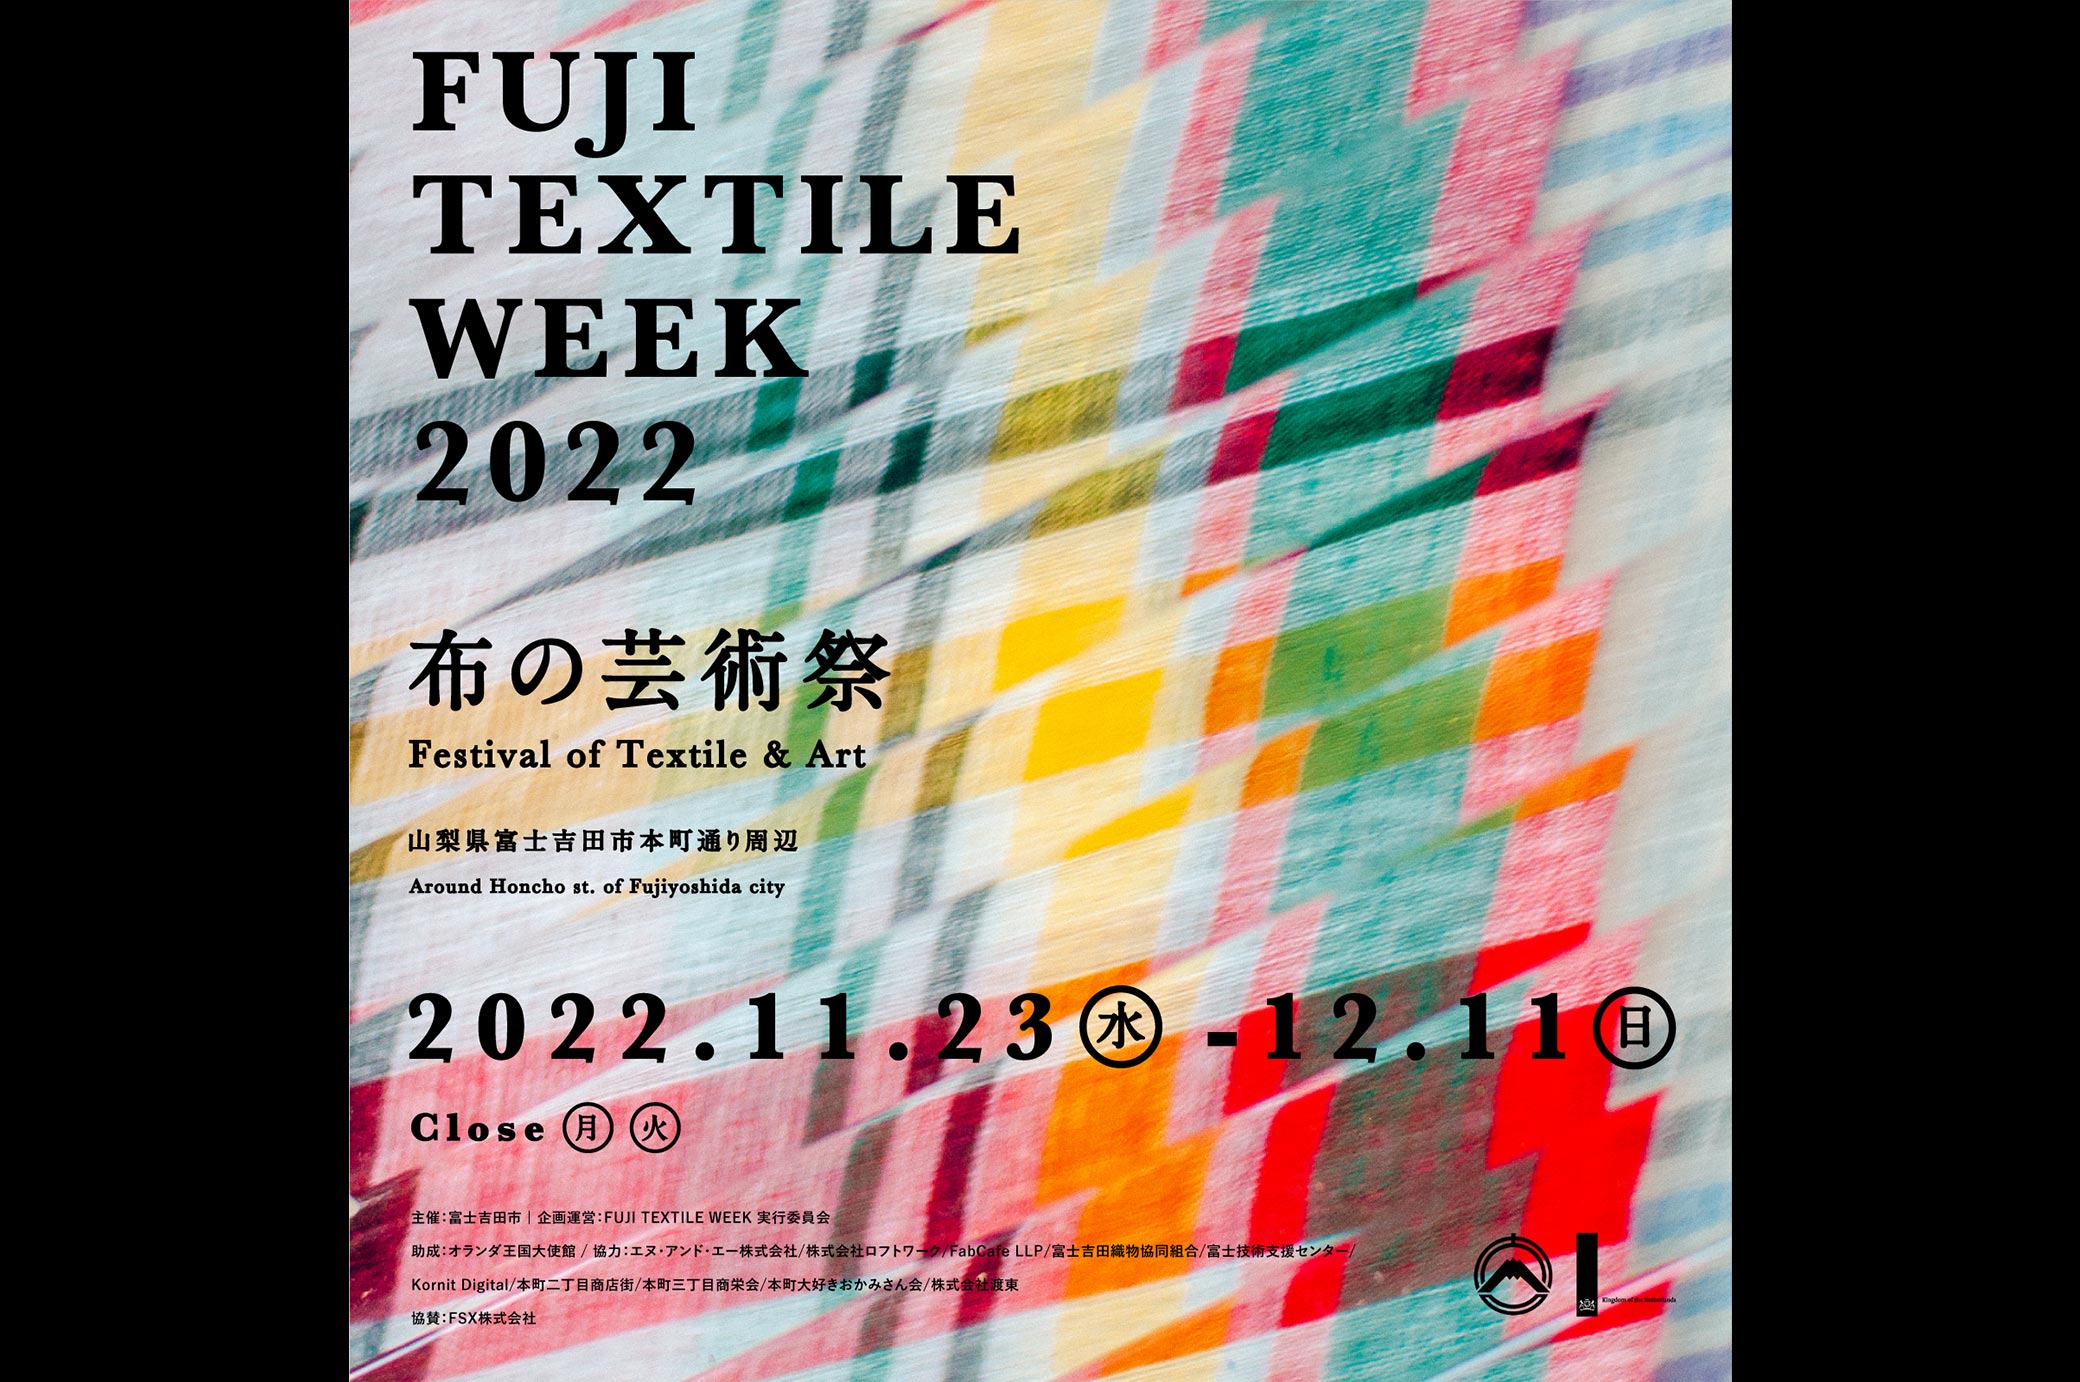 FUJI TEXTILE WEEK 2022 アート展「織りと気配」のキービジュアル